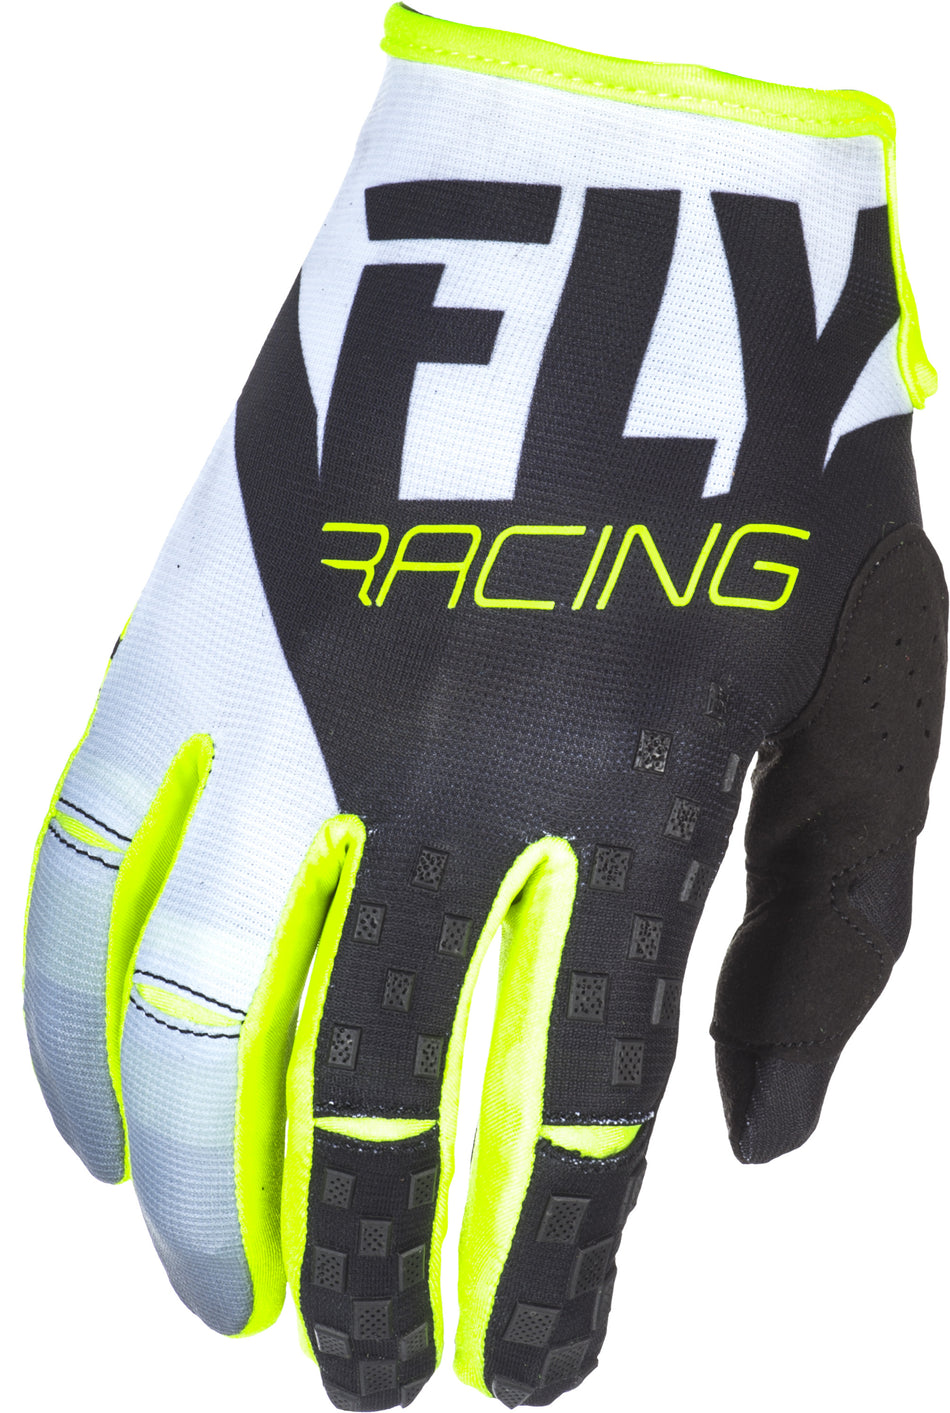 FLY RACING Kinetic Gloves Black/White/Hi-Vis Sz 12 371-41612